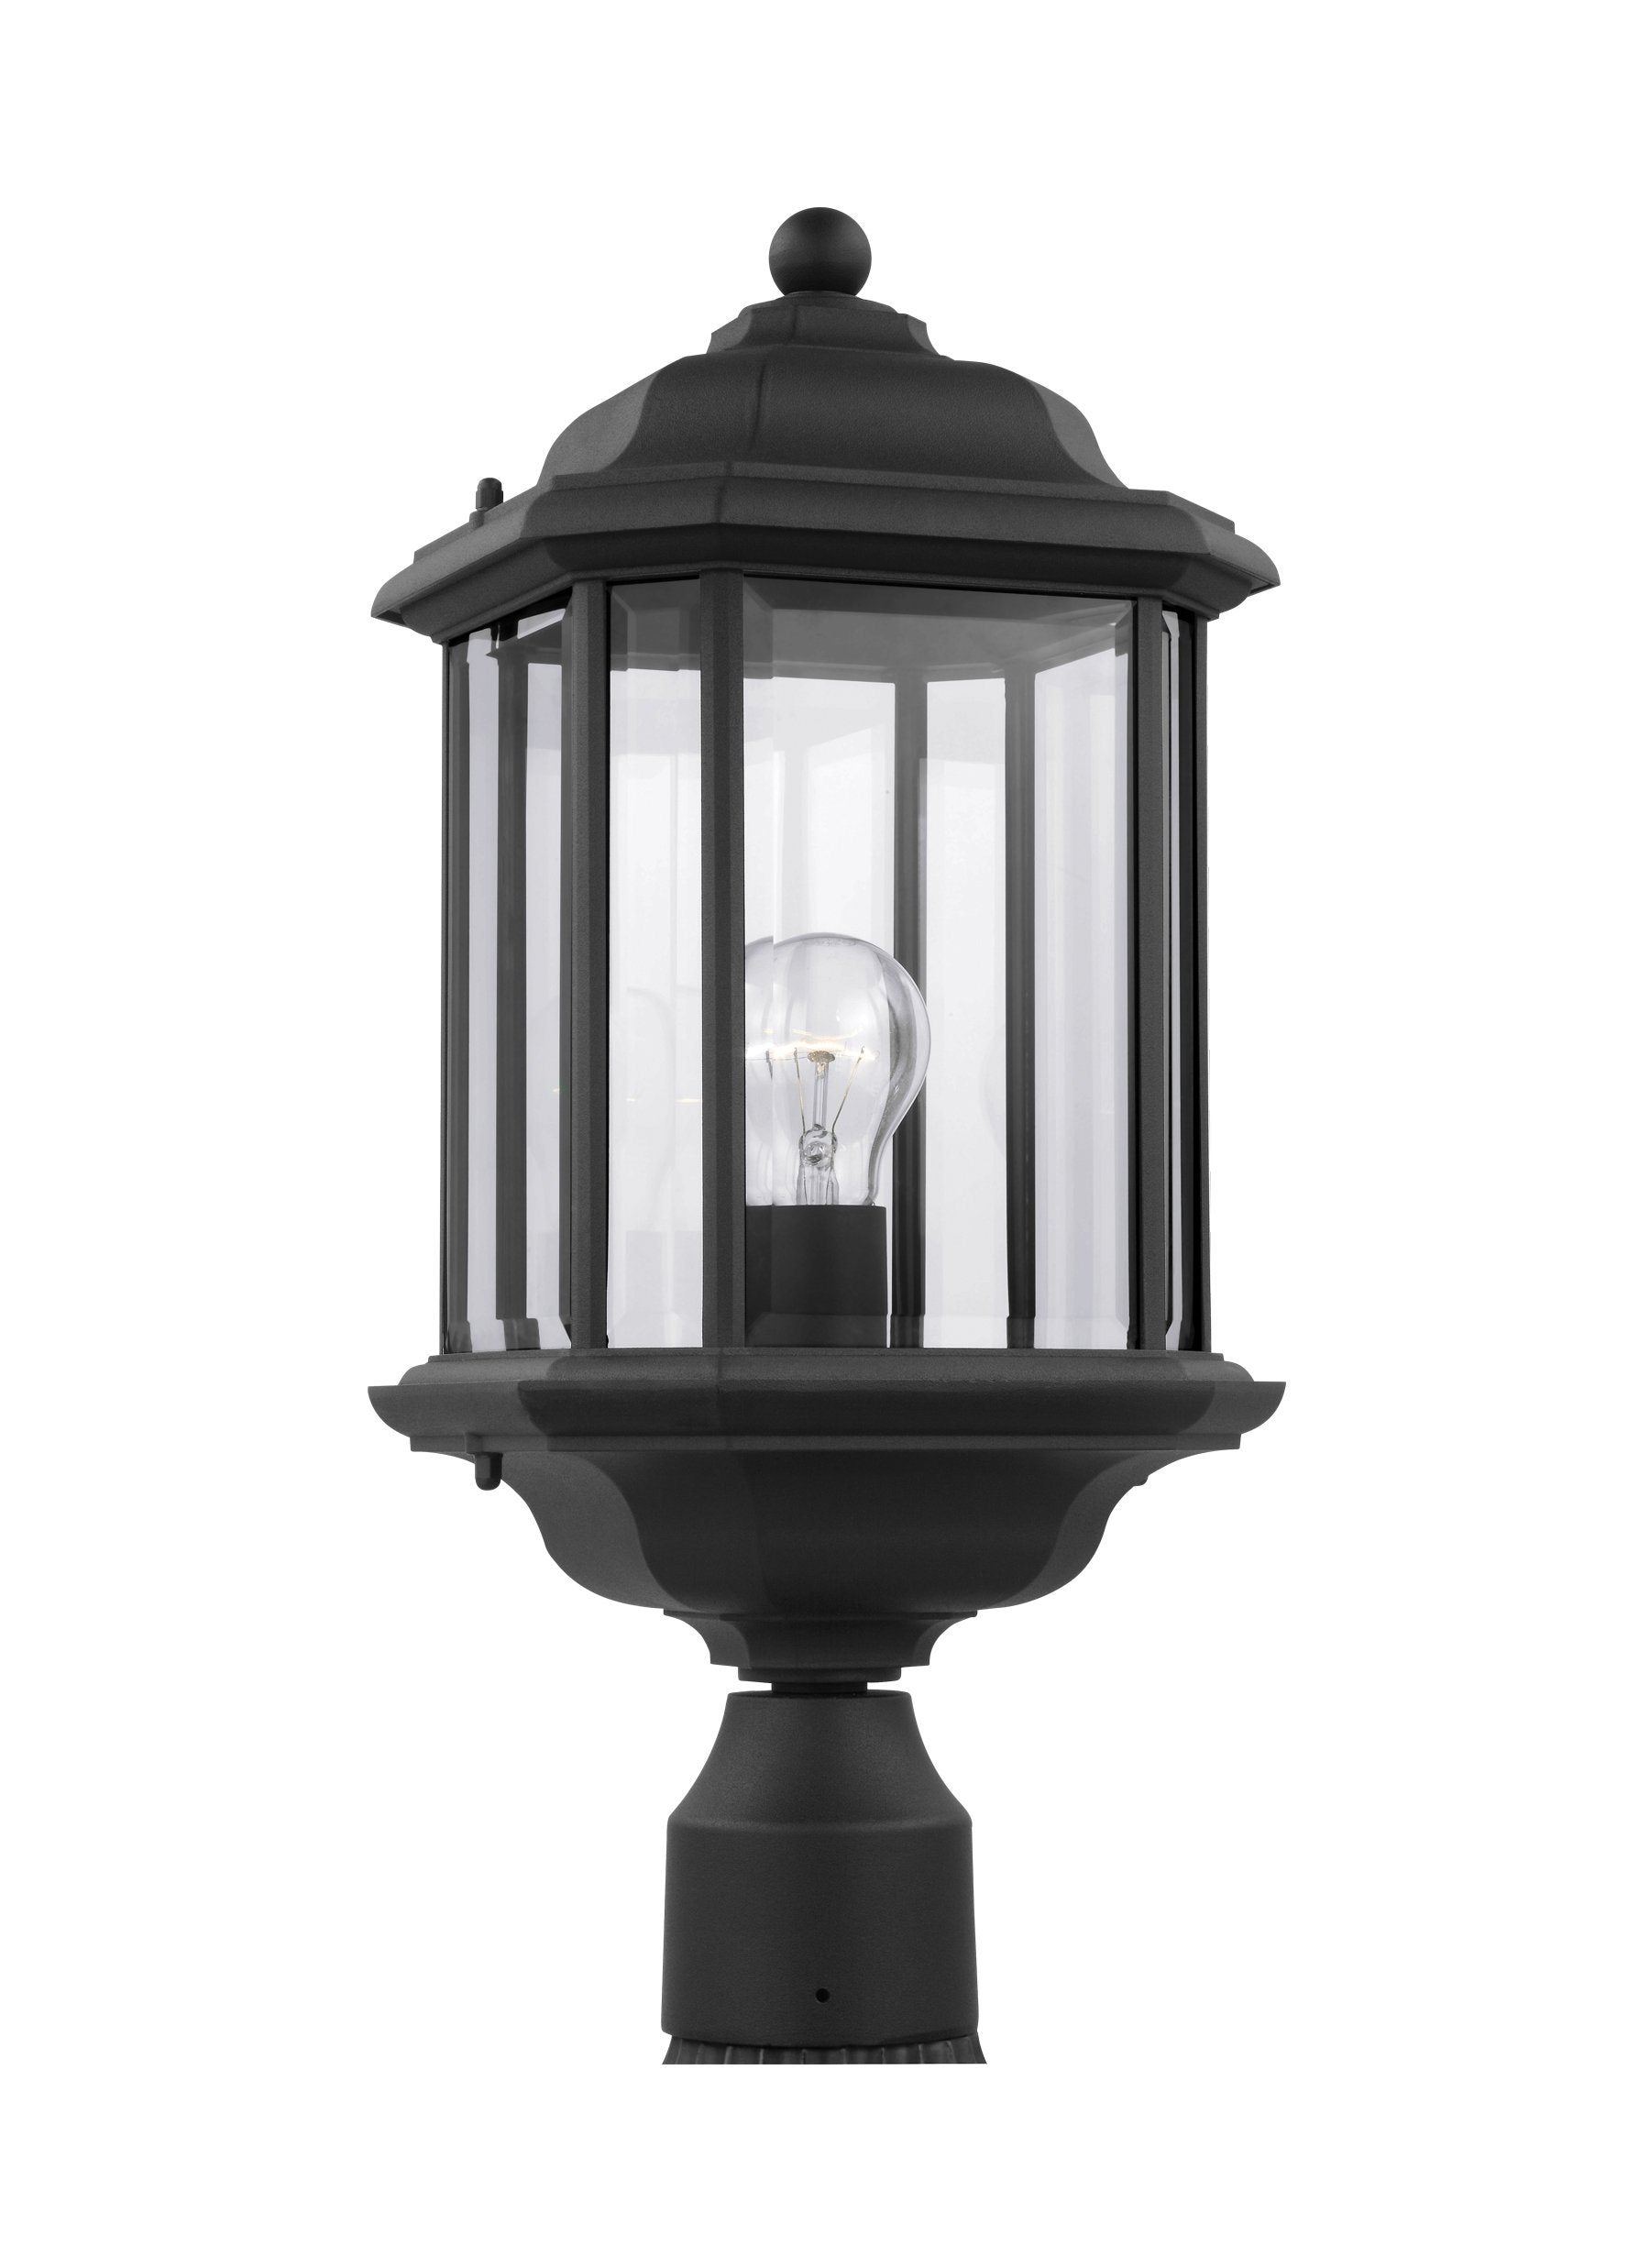 Kent One Light Outdoor Post Lantern - Black Outdoor Sea Gull Lighting 